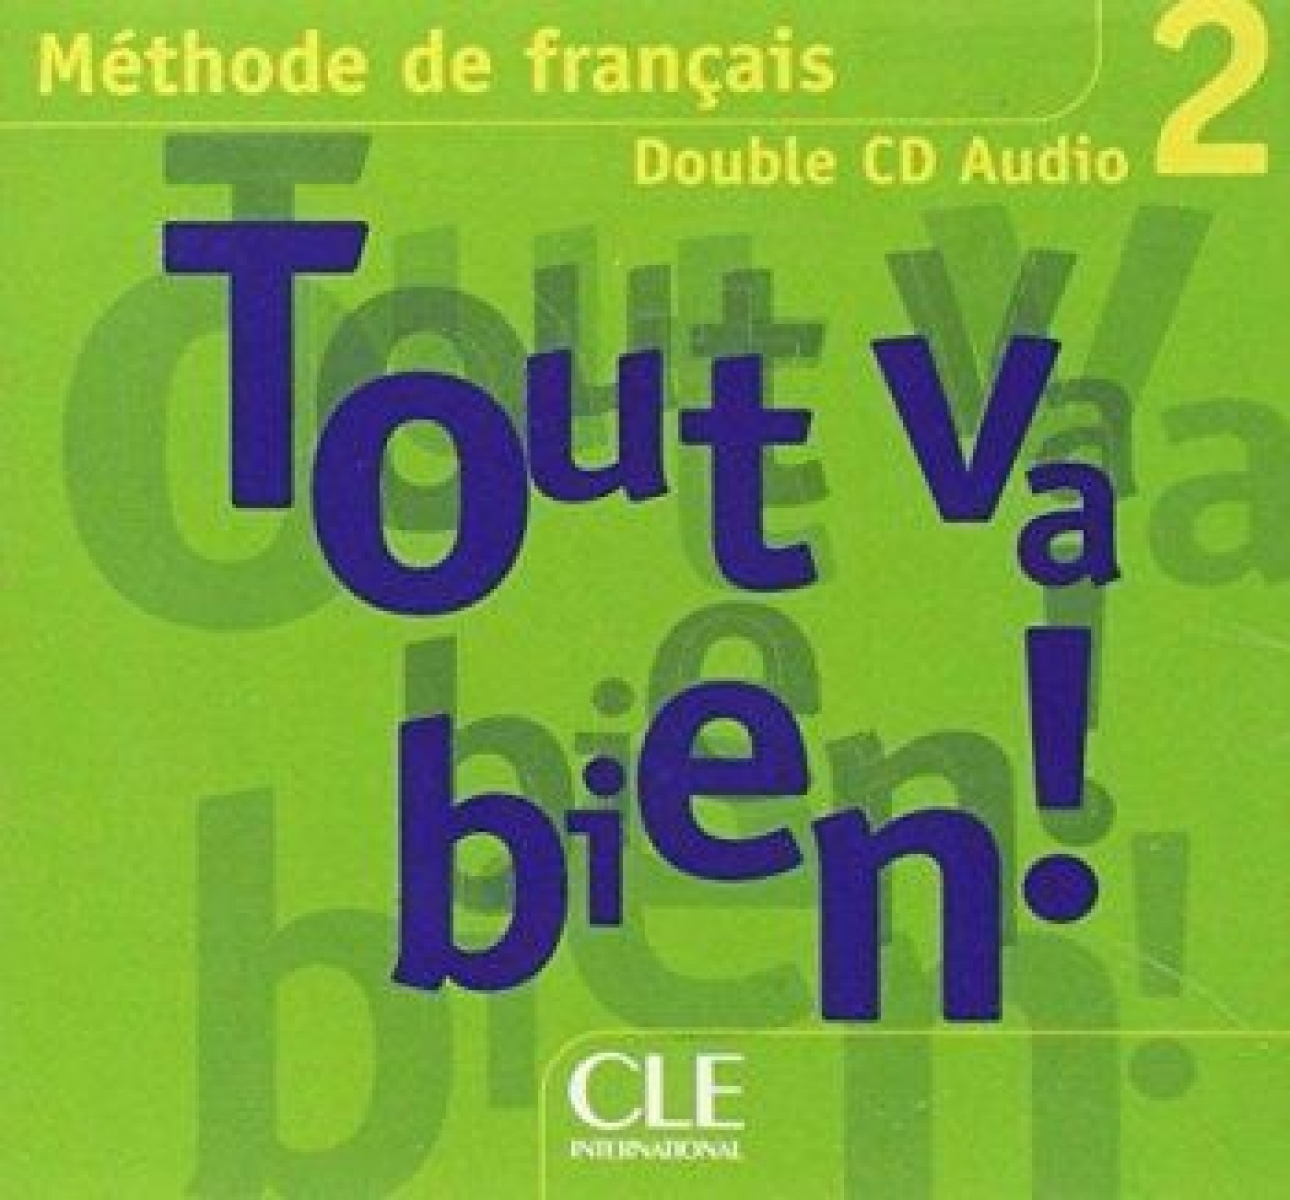 Helene Auge Tout va bien ! 2 - 2 CD audio collectifs () 